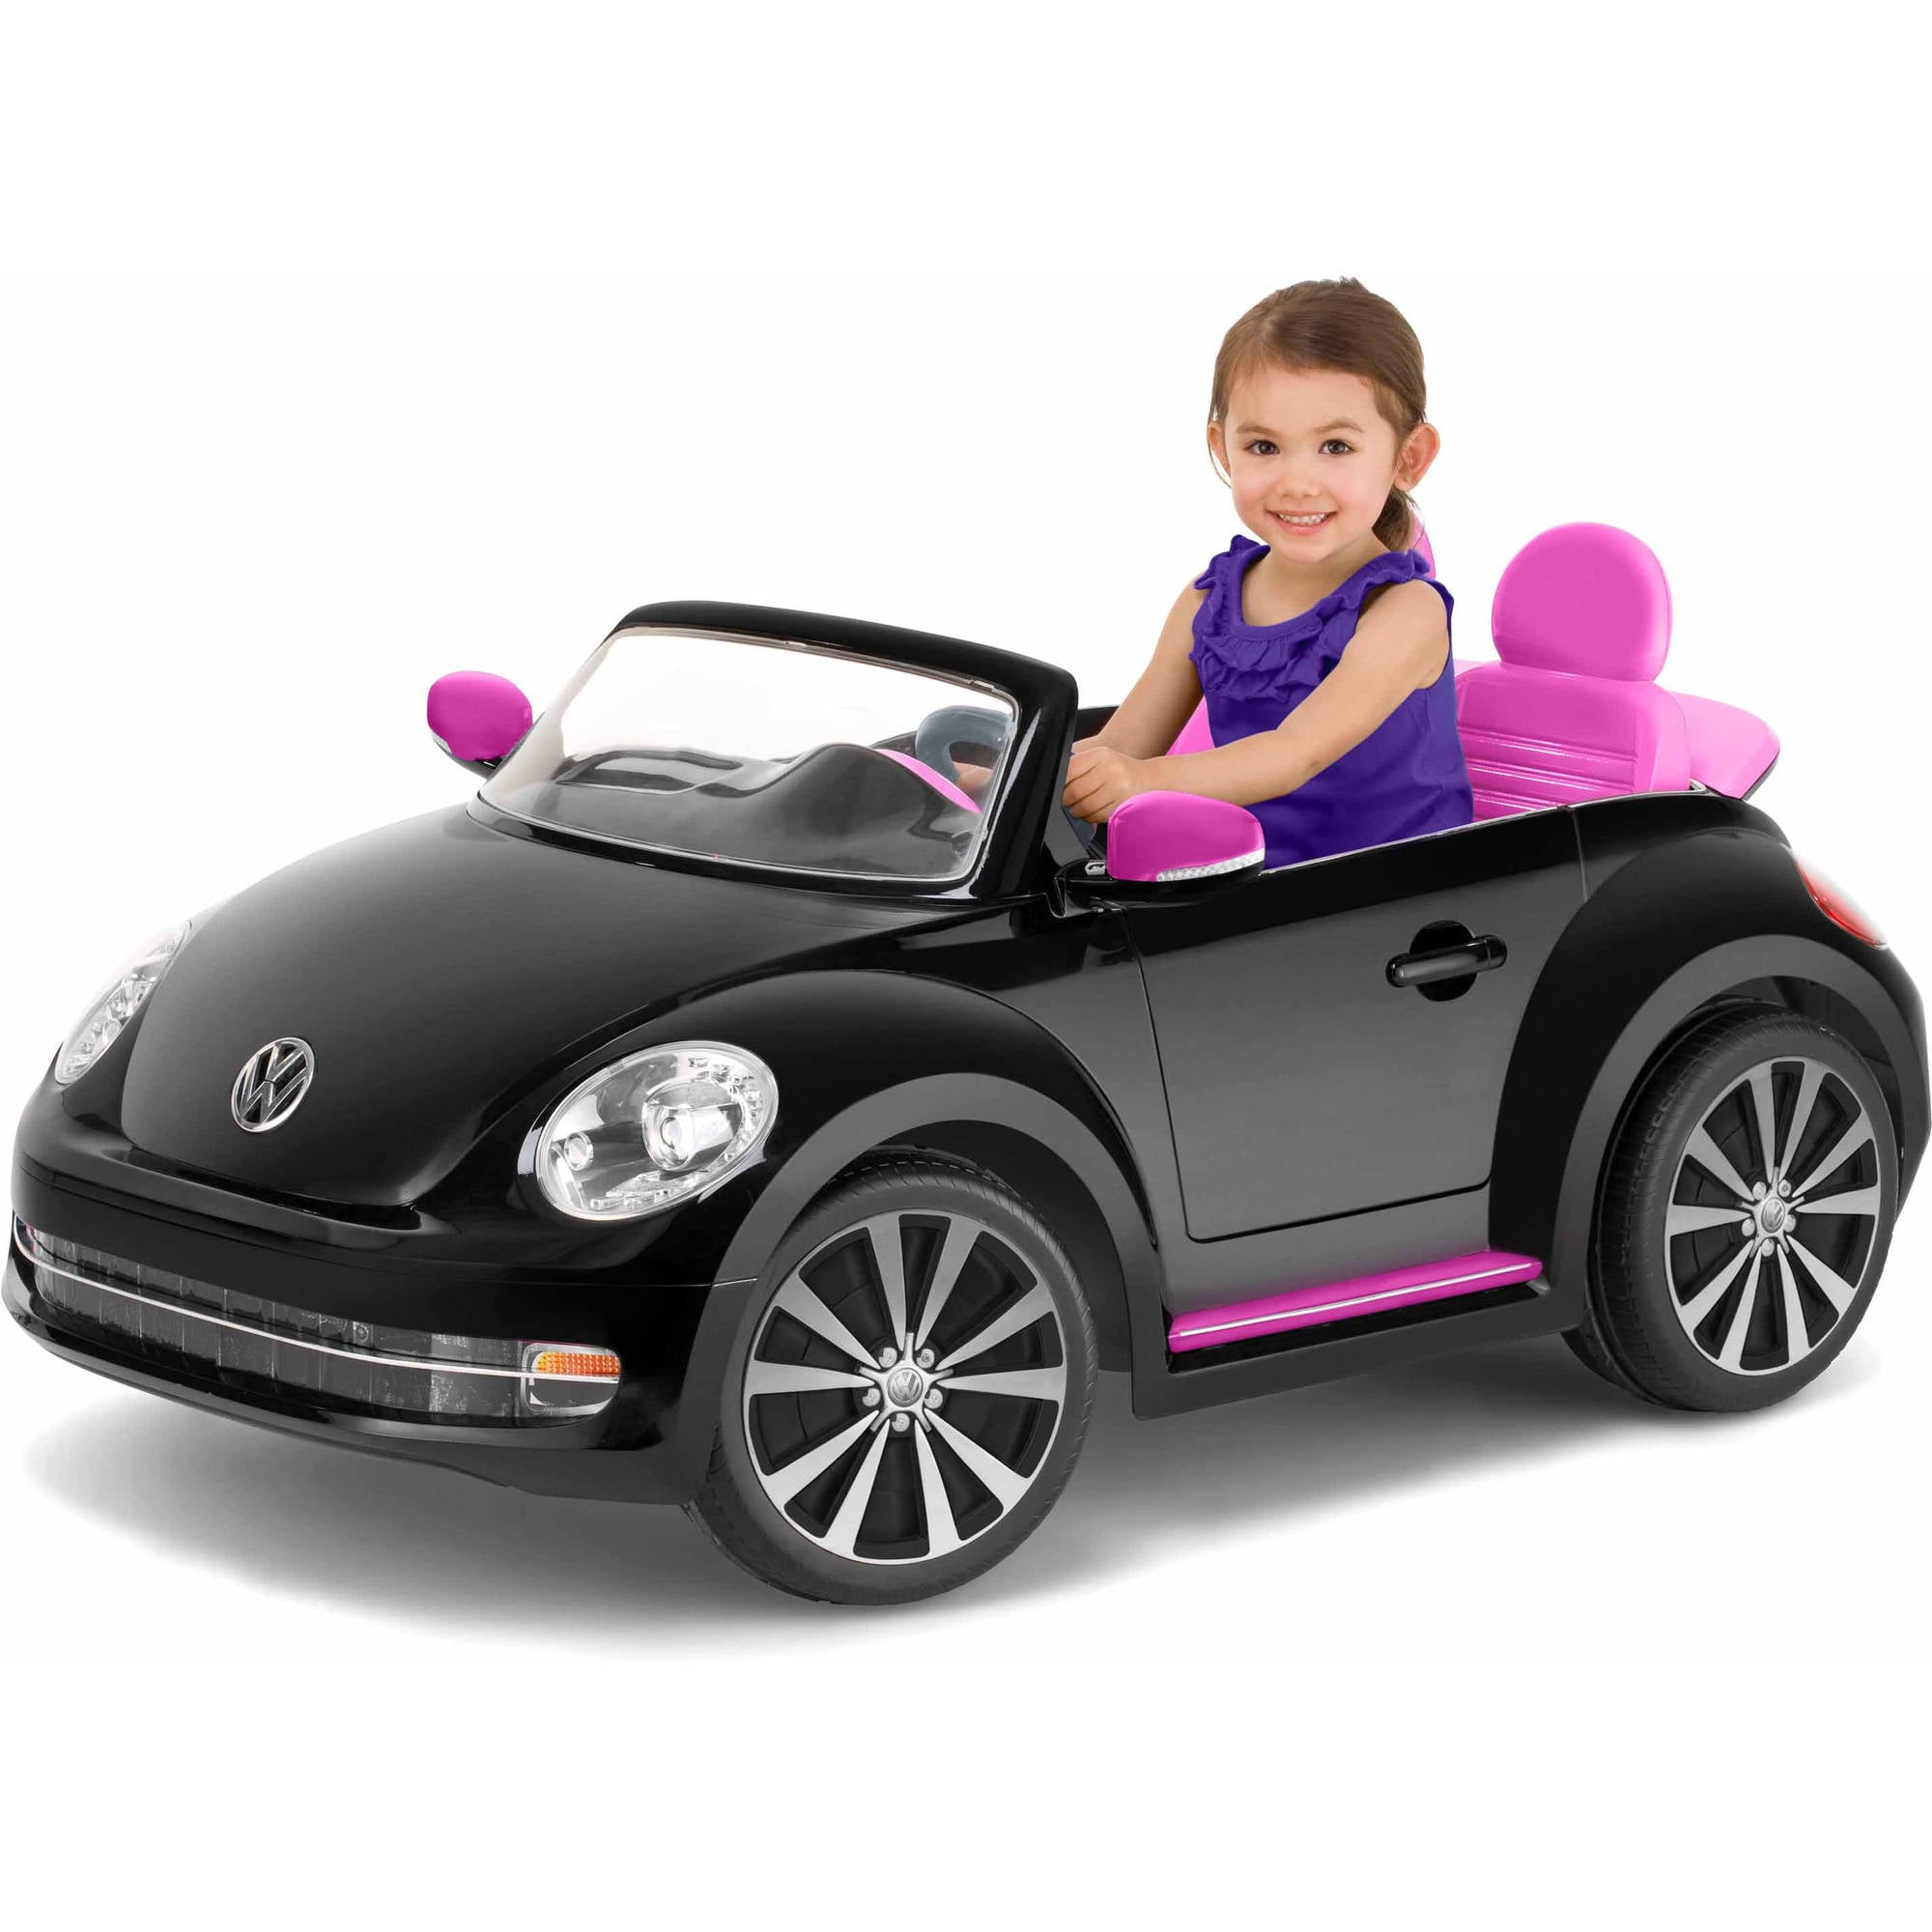 volkswagen ride on toy